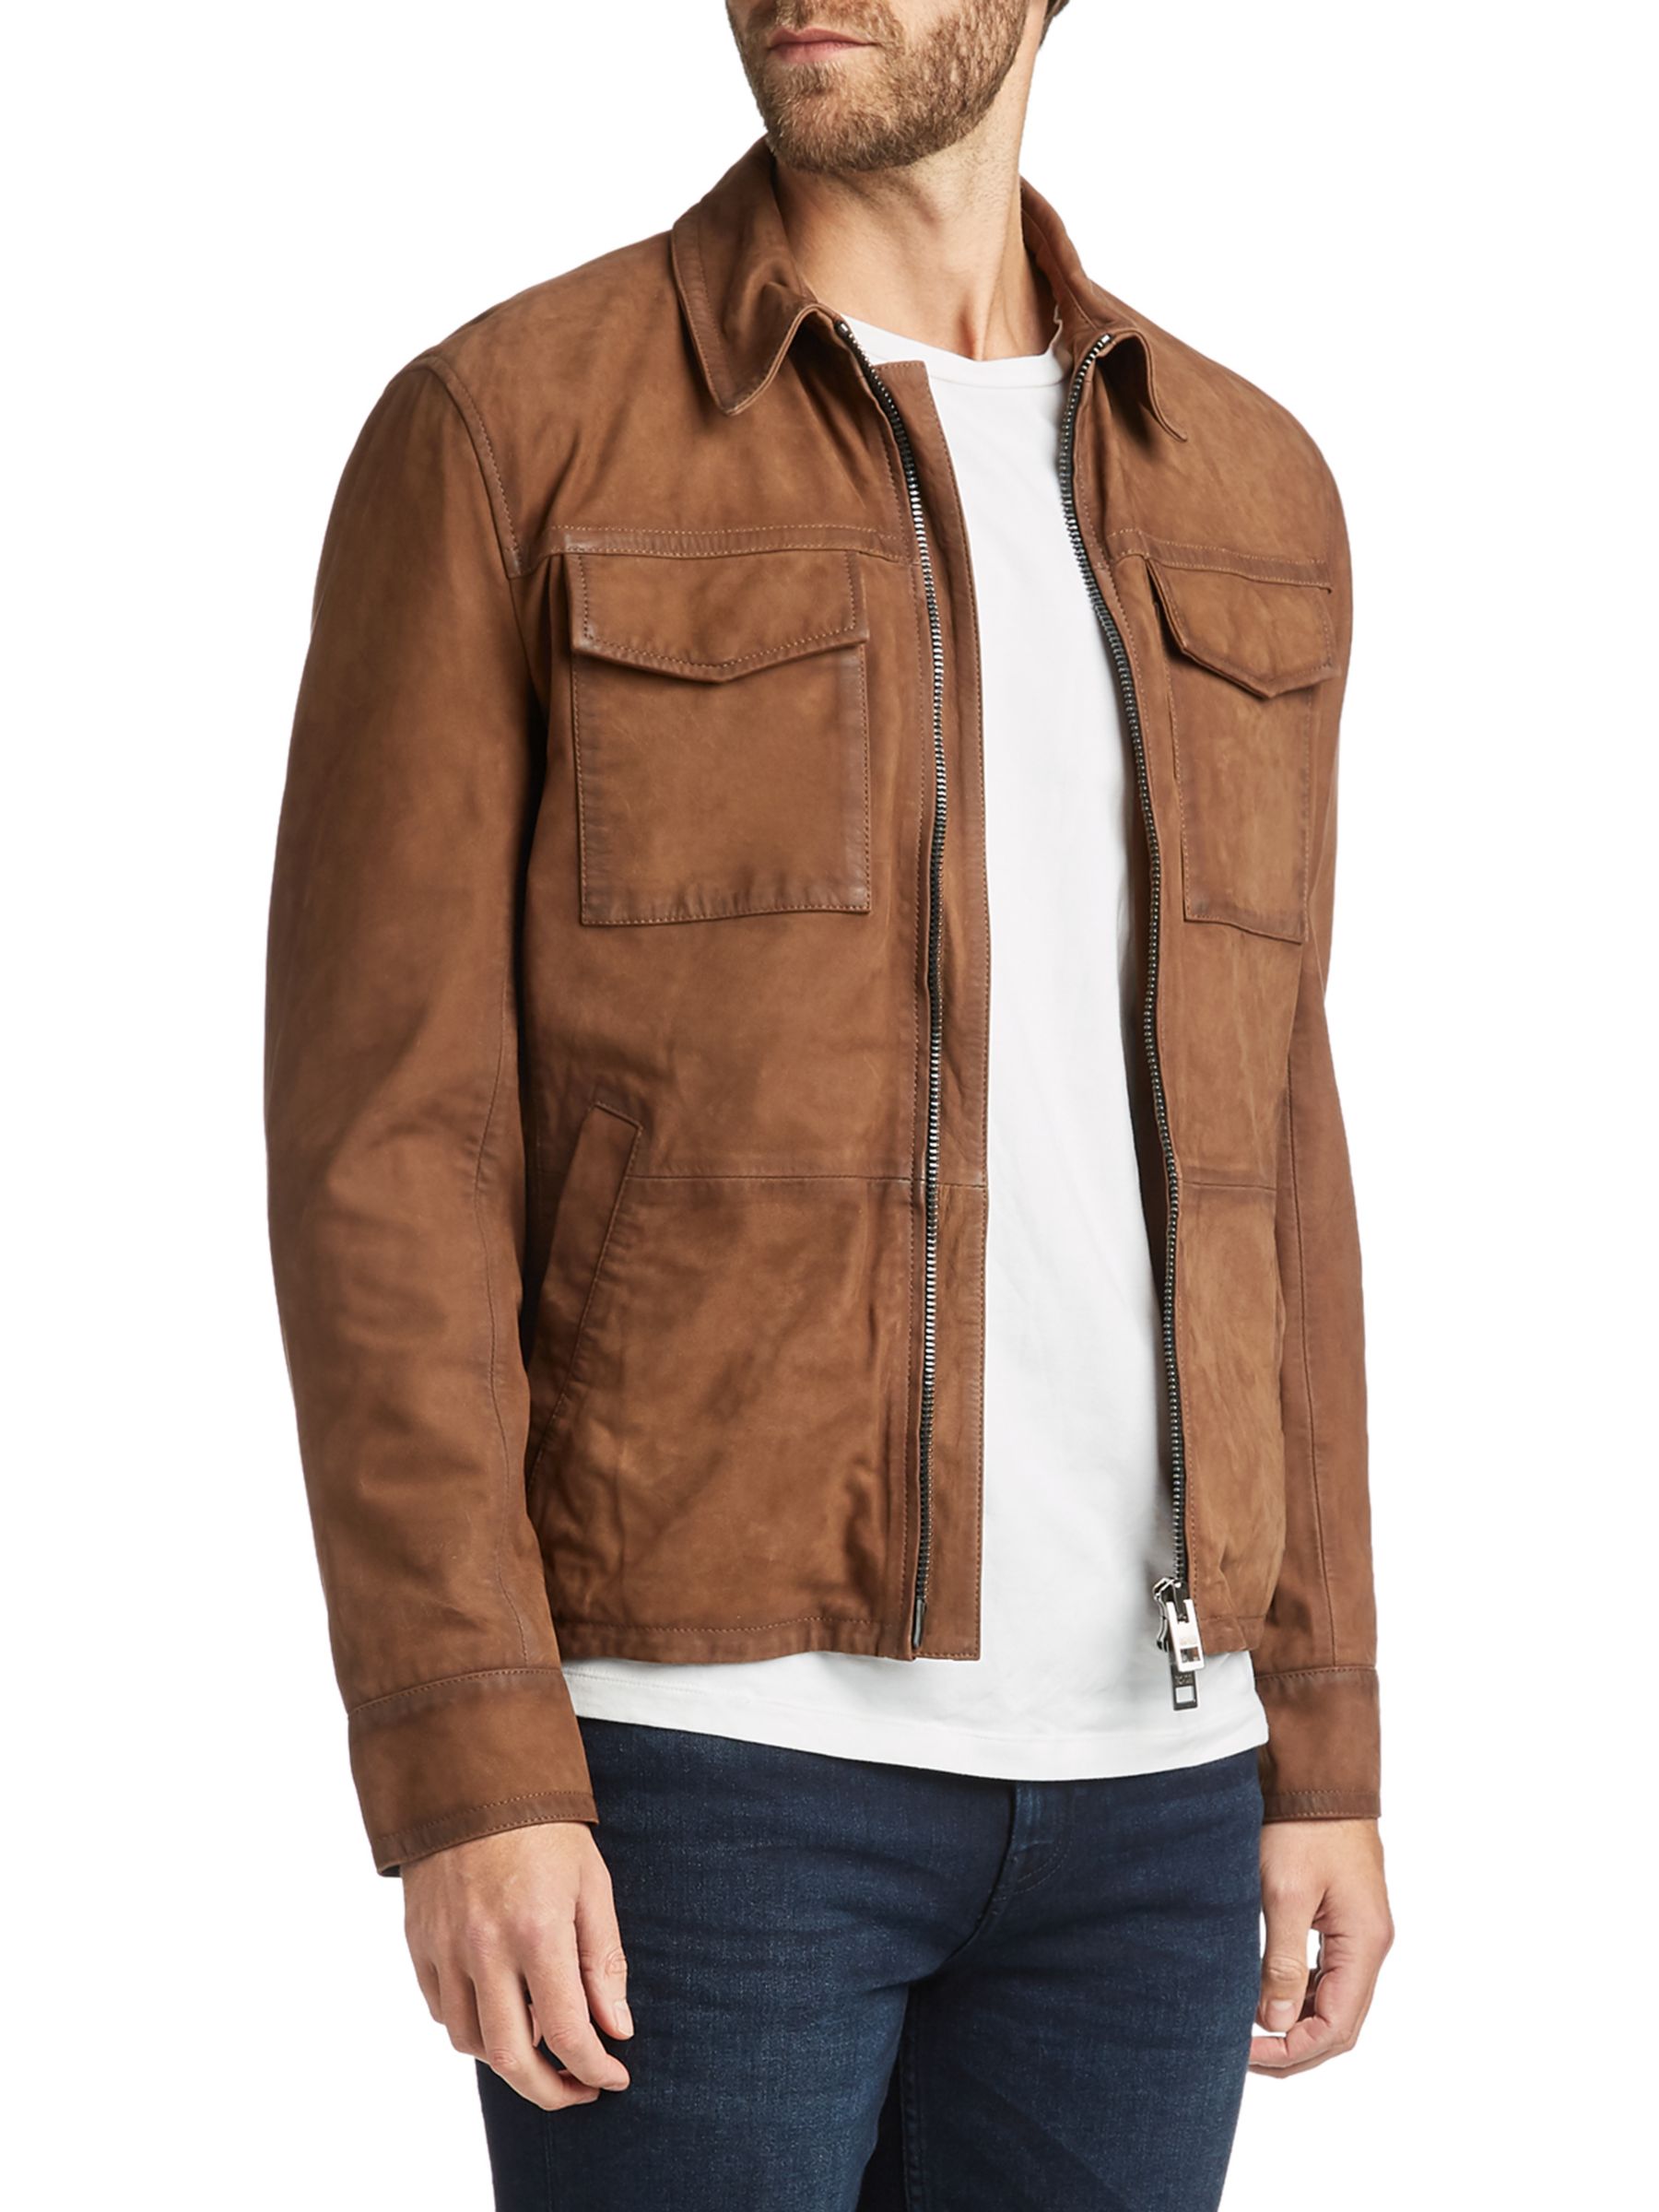 hugo boss brown leather jacket mens